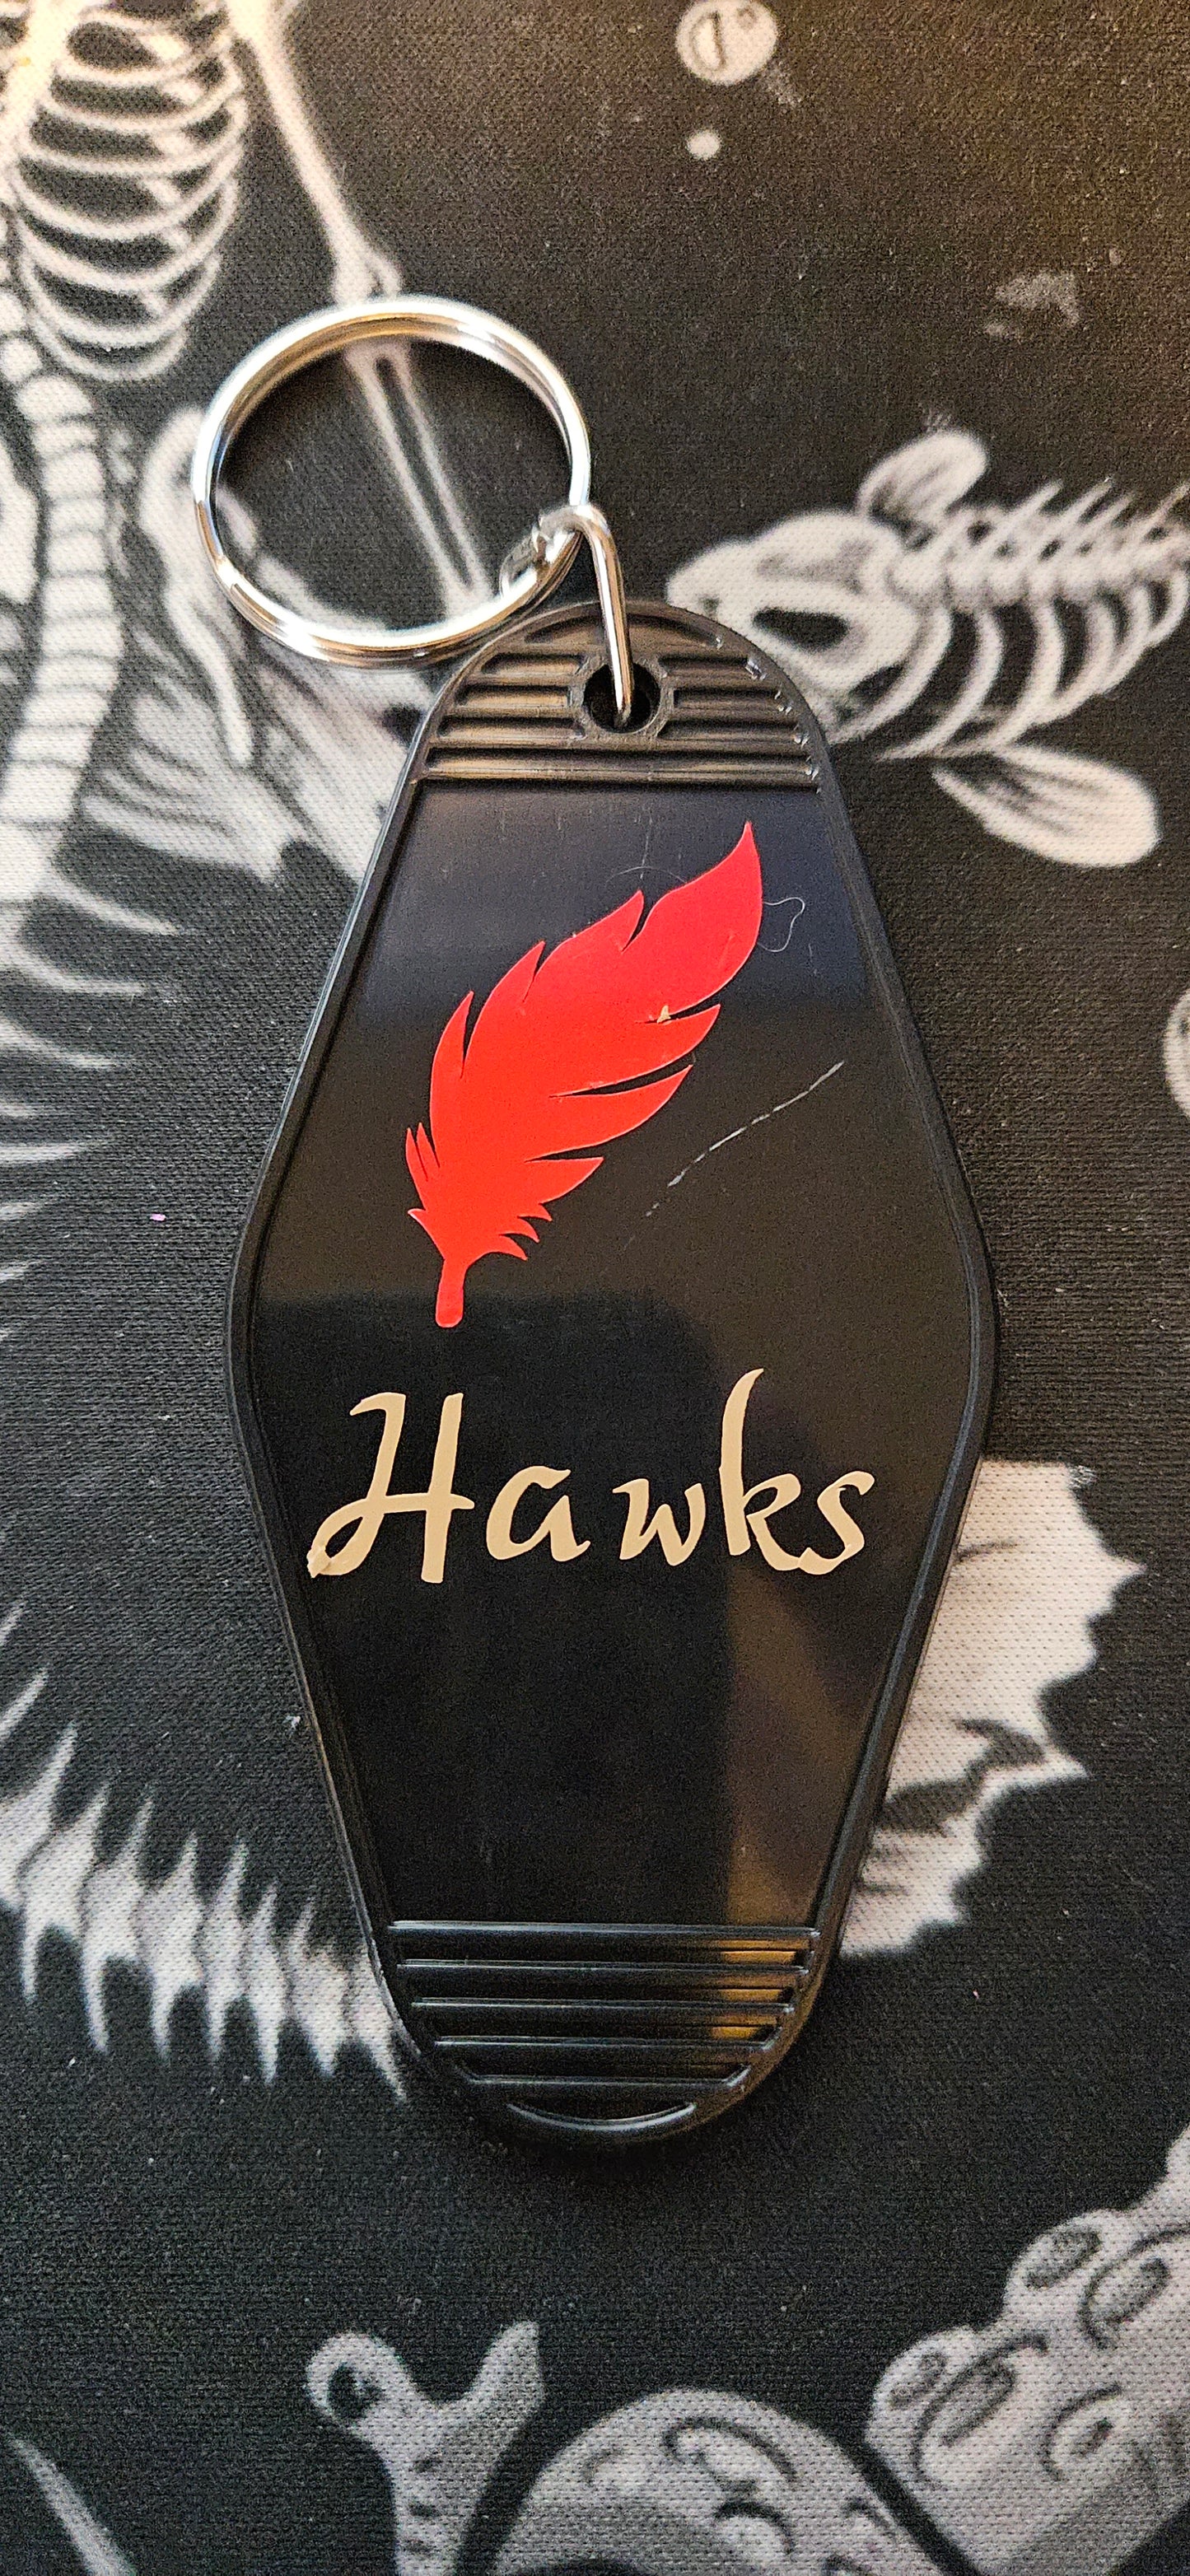 Hawks Motel Keychain